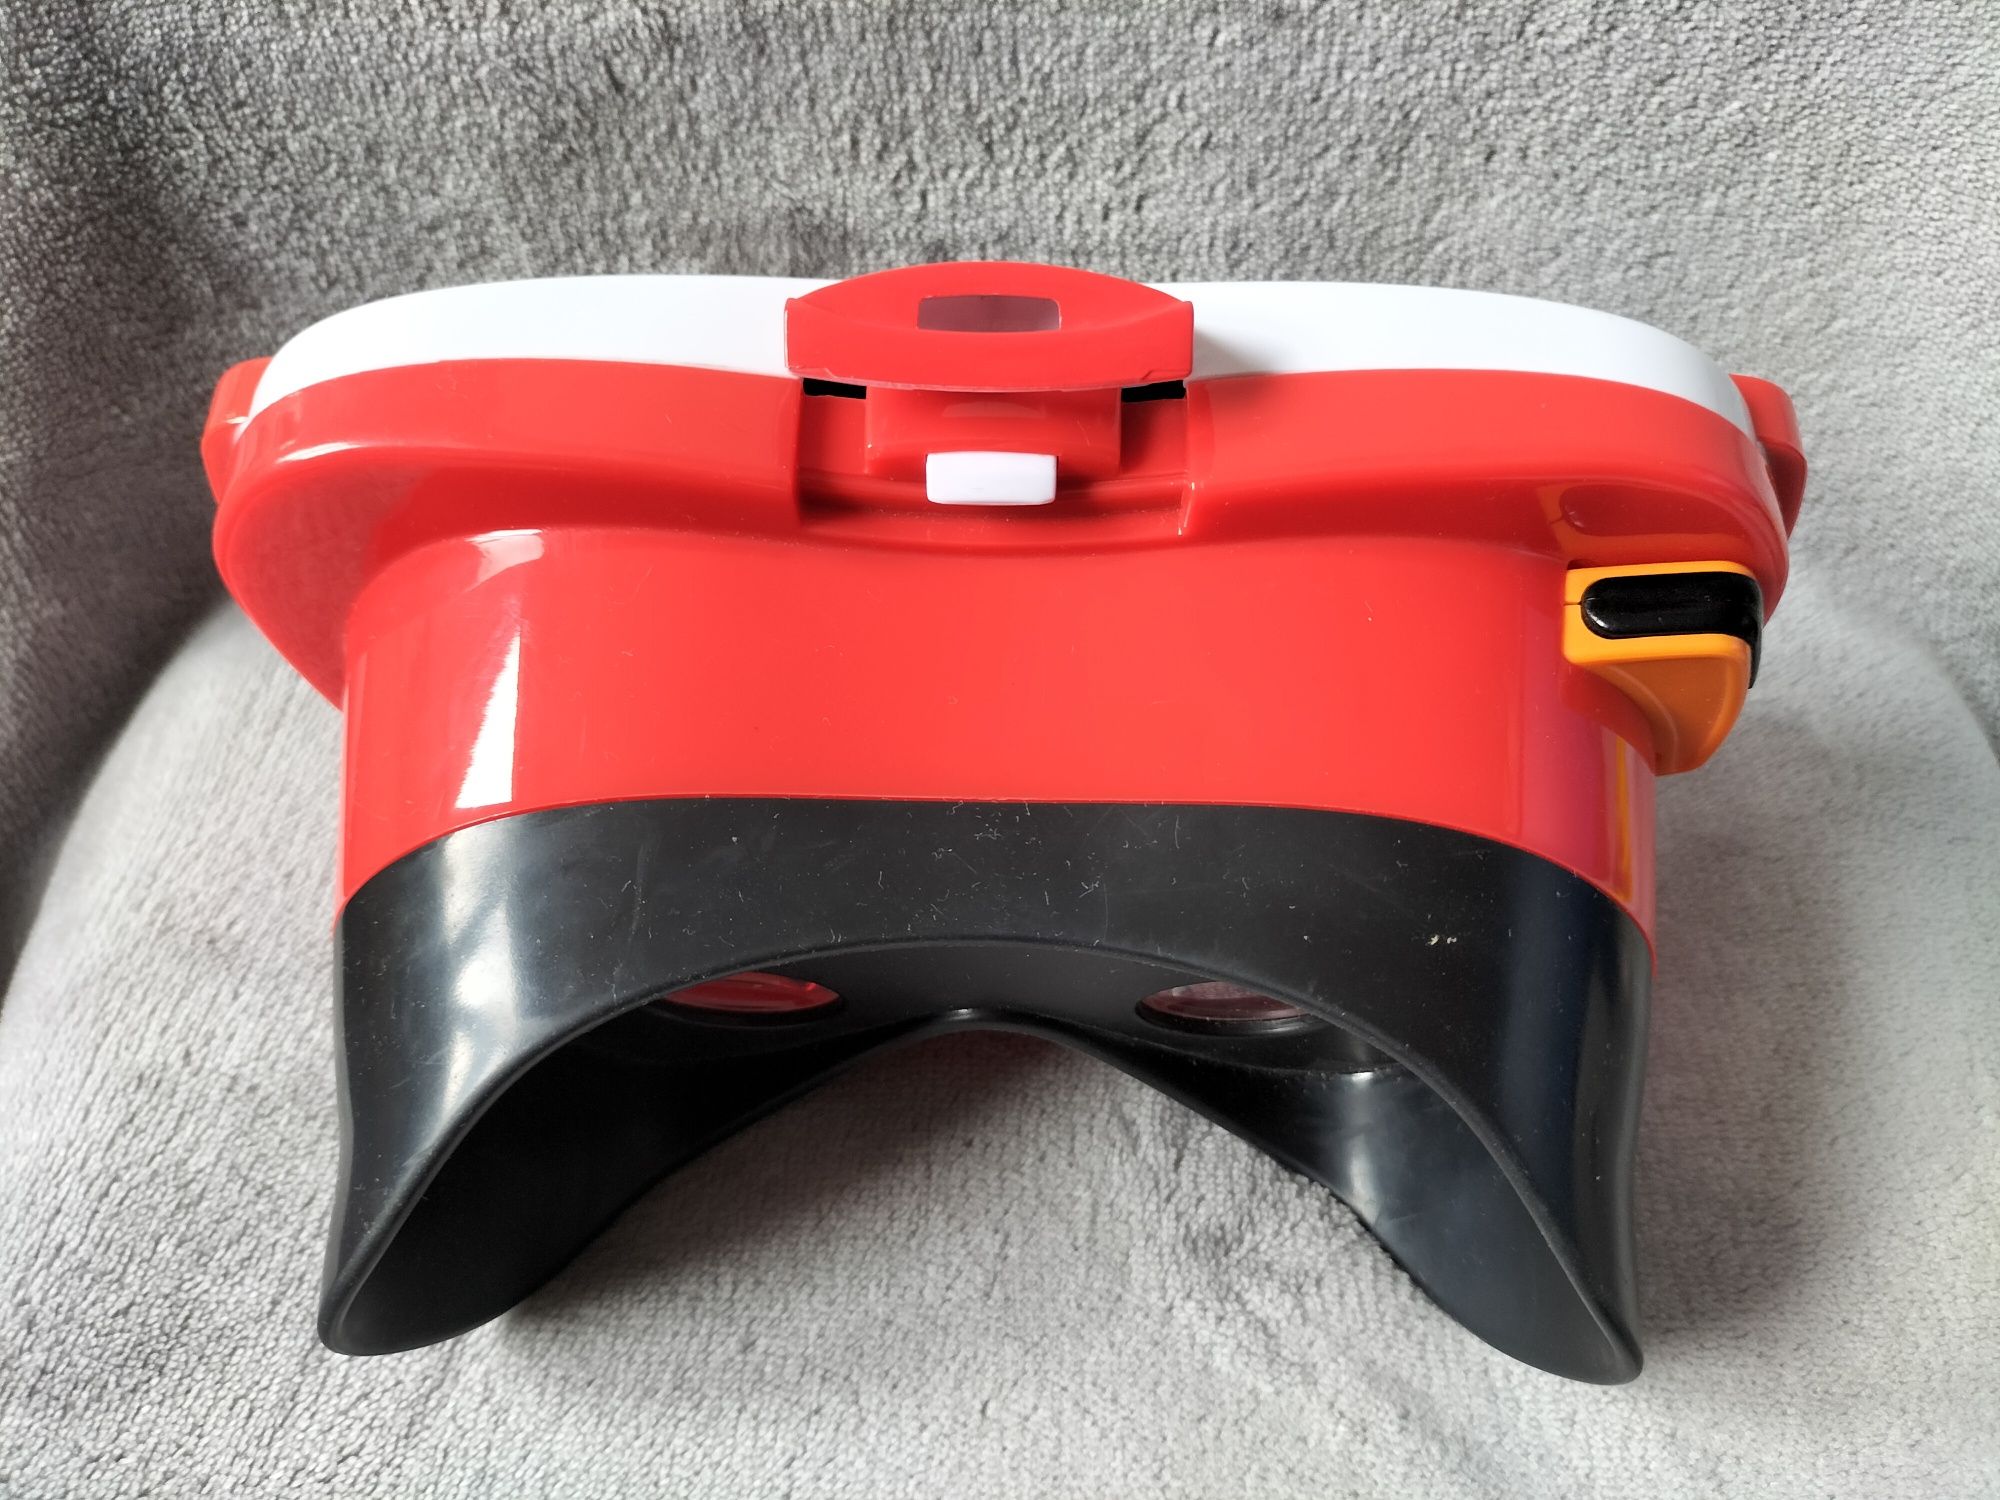 Okulary VR View-Master firmy Mattel